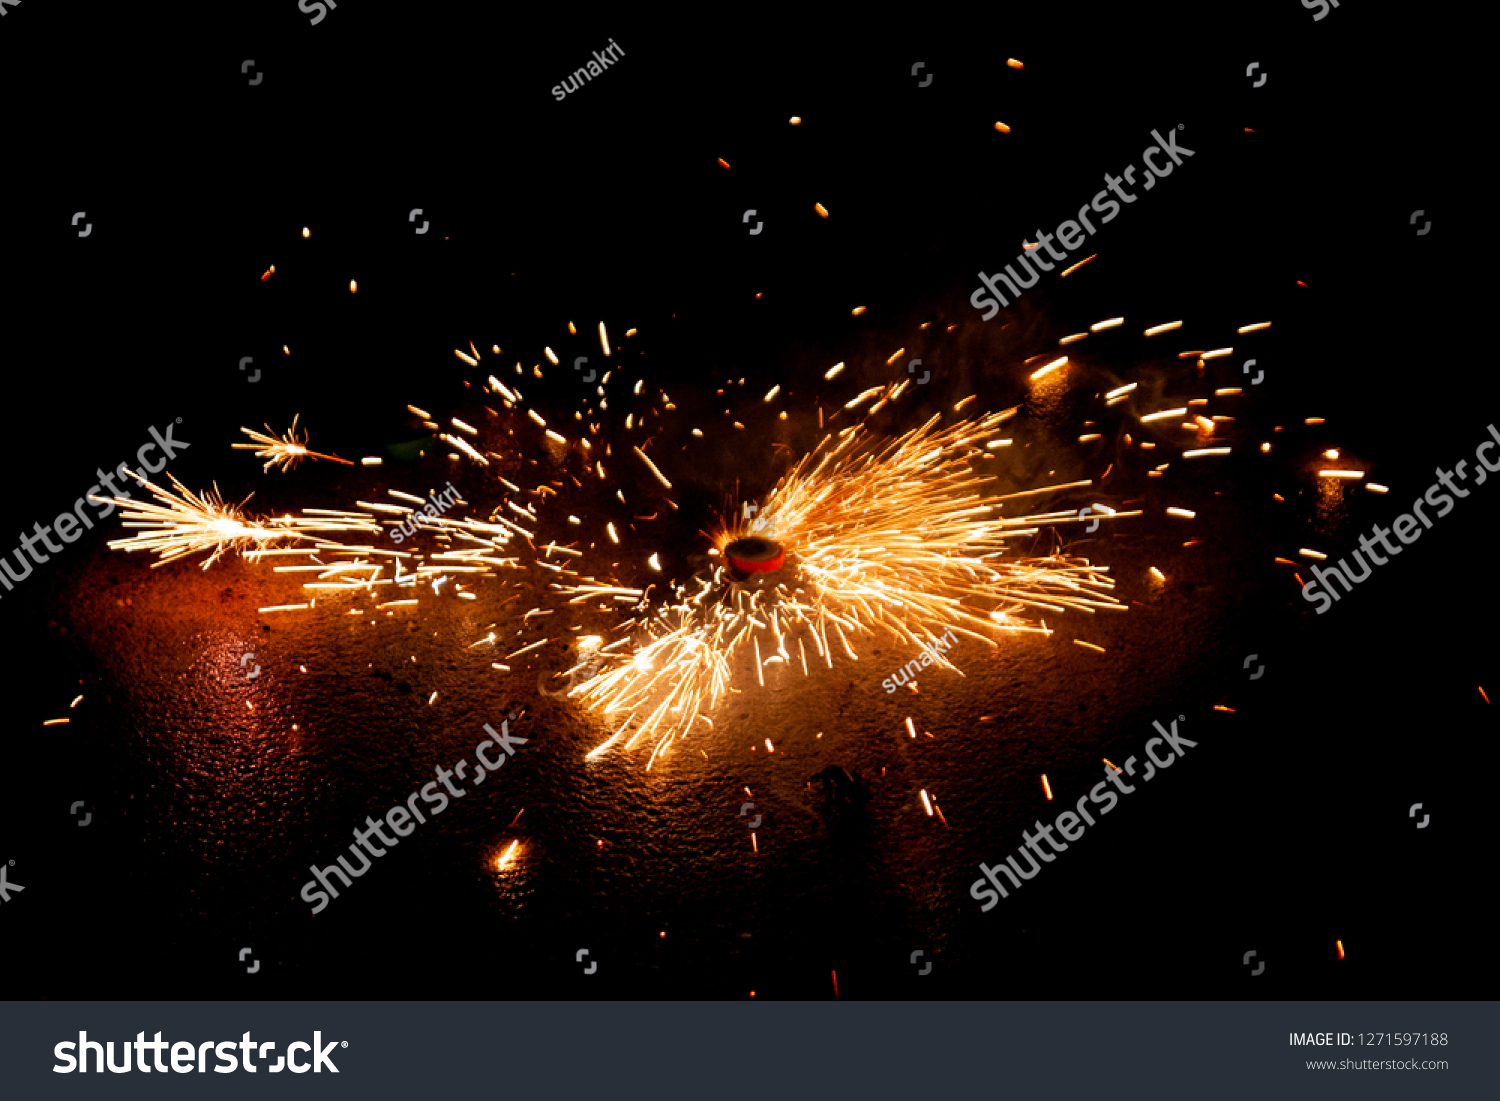 Explosive fireworks on sylvester lightens in the dark with sparks of light #1271597188